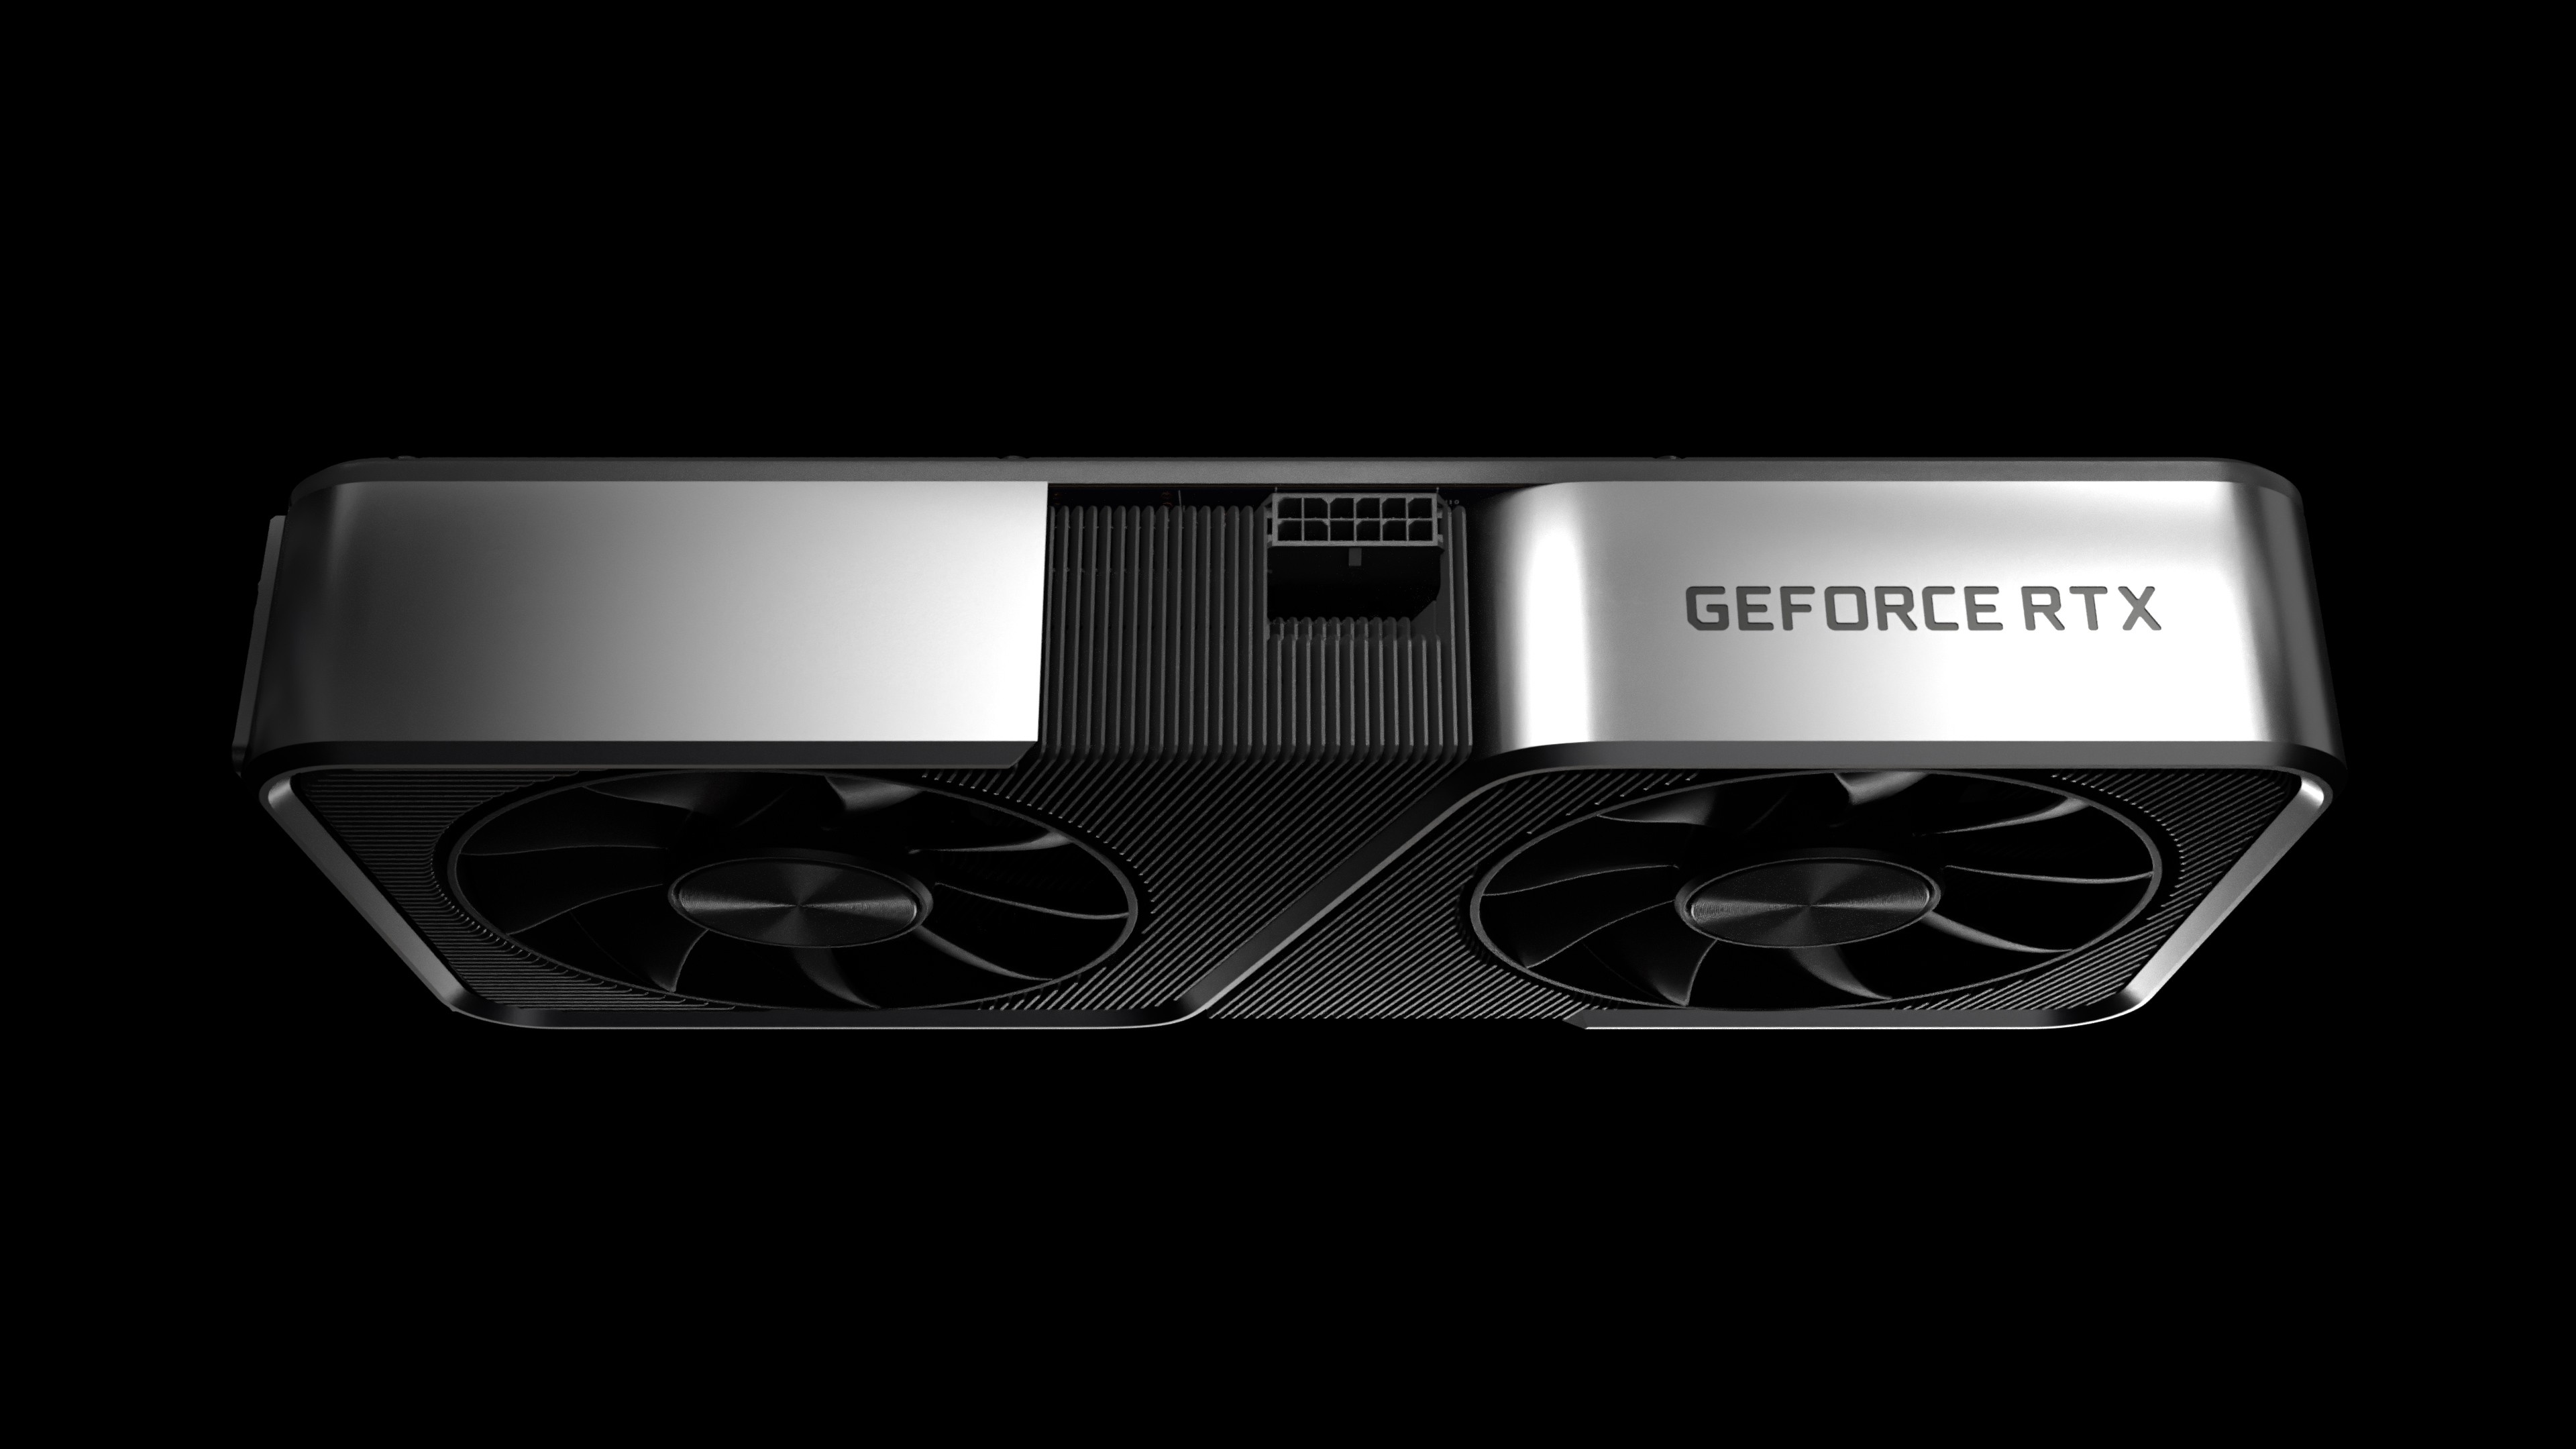 General 3840x2160 Nvidia computer PC gaming GPUs technology hardware